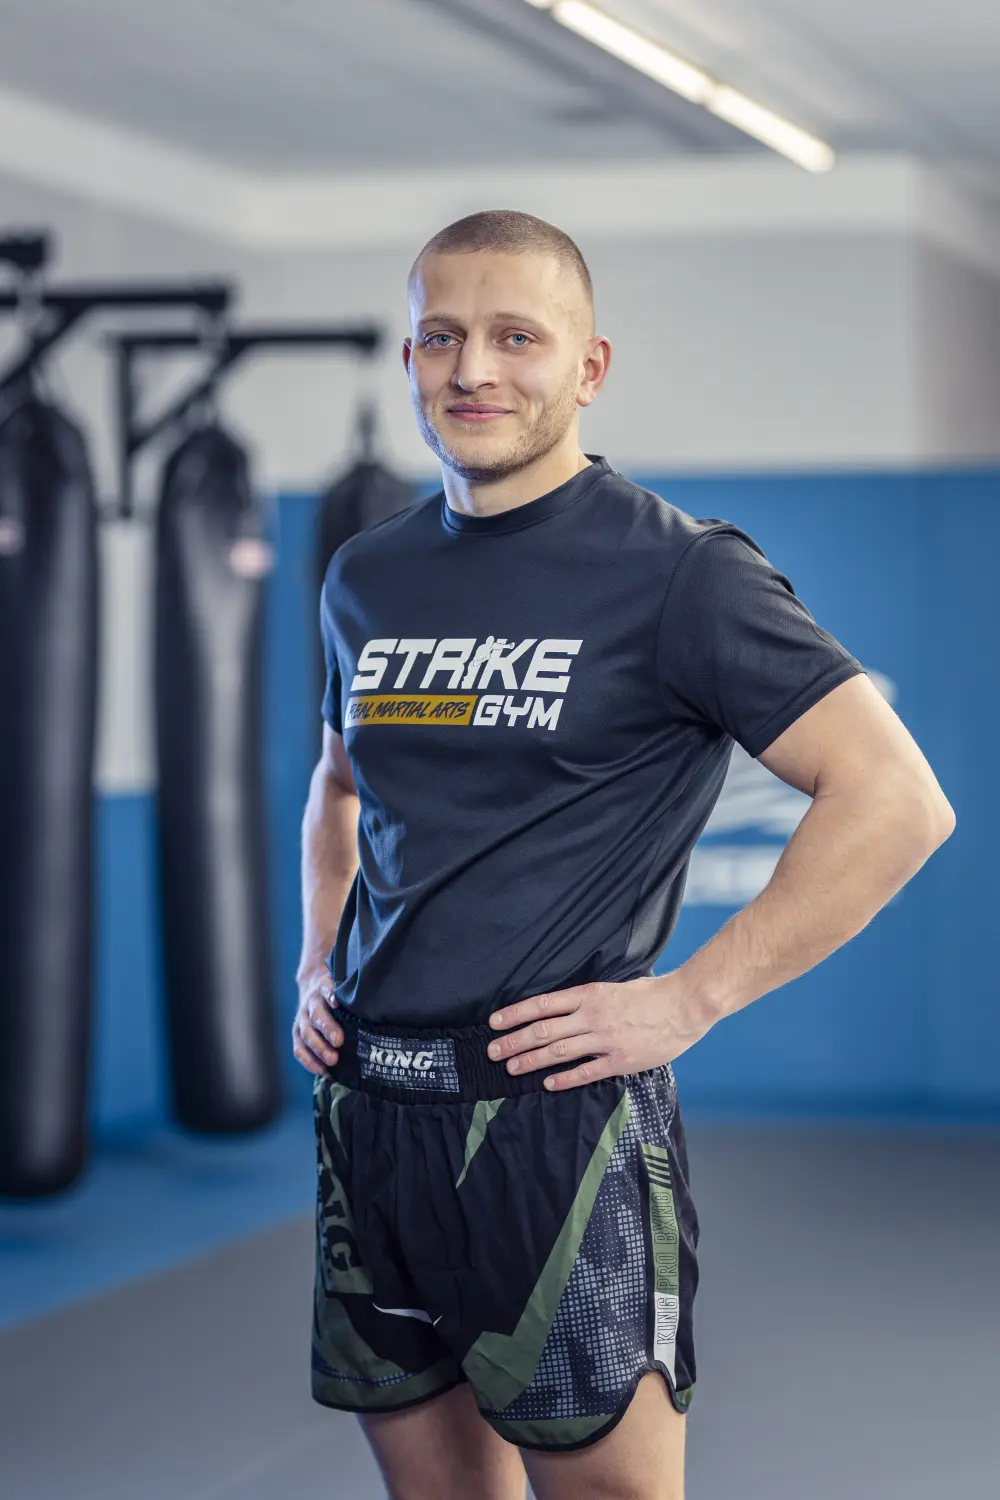 STRIKE GYM UG - Nikita Maleev Kampfsporttraining